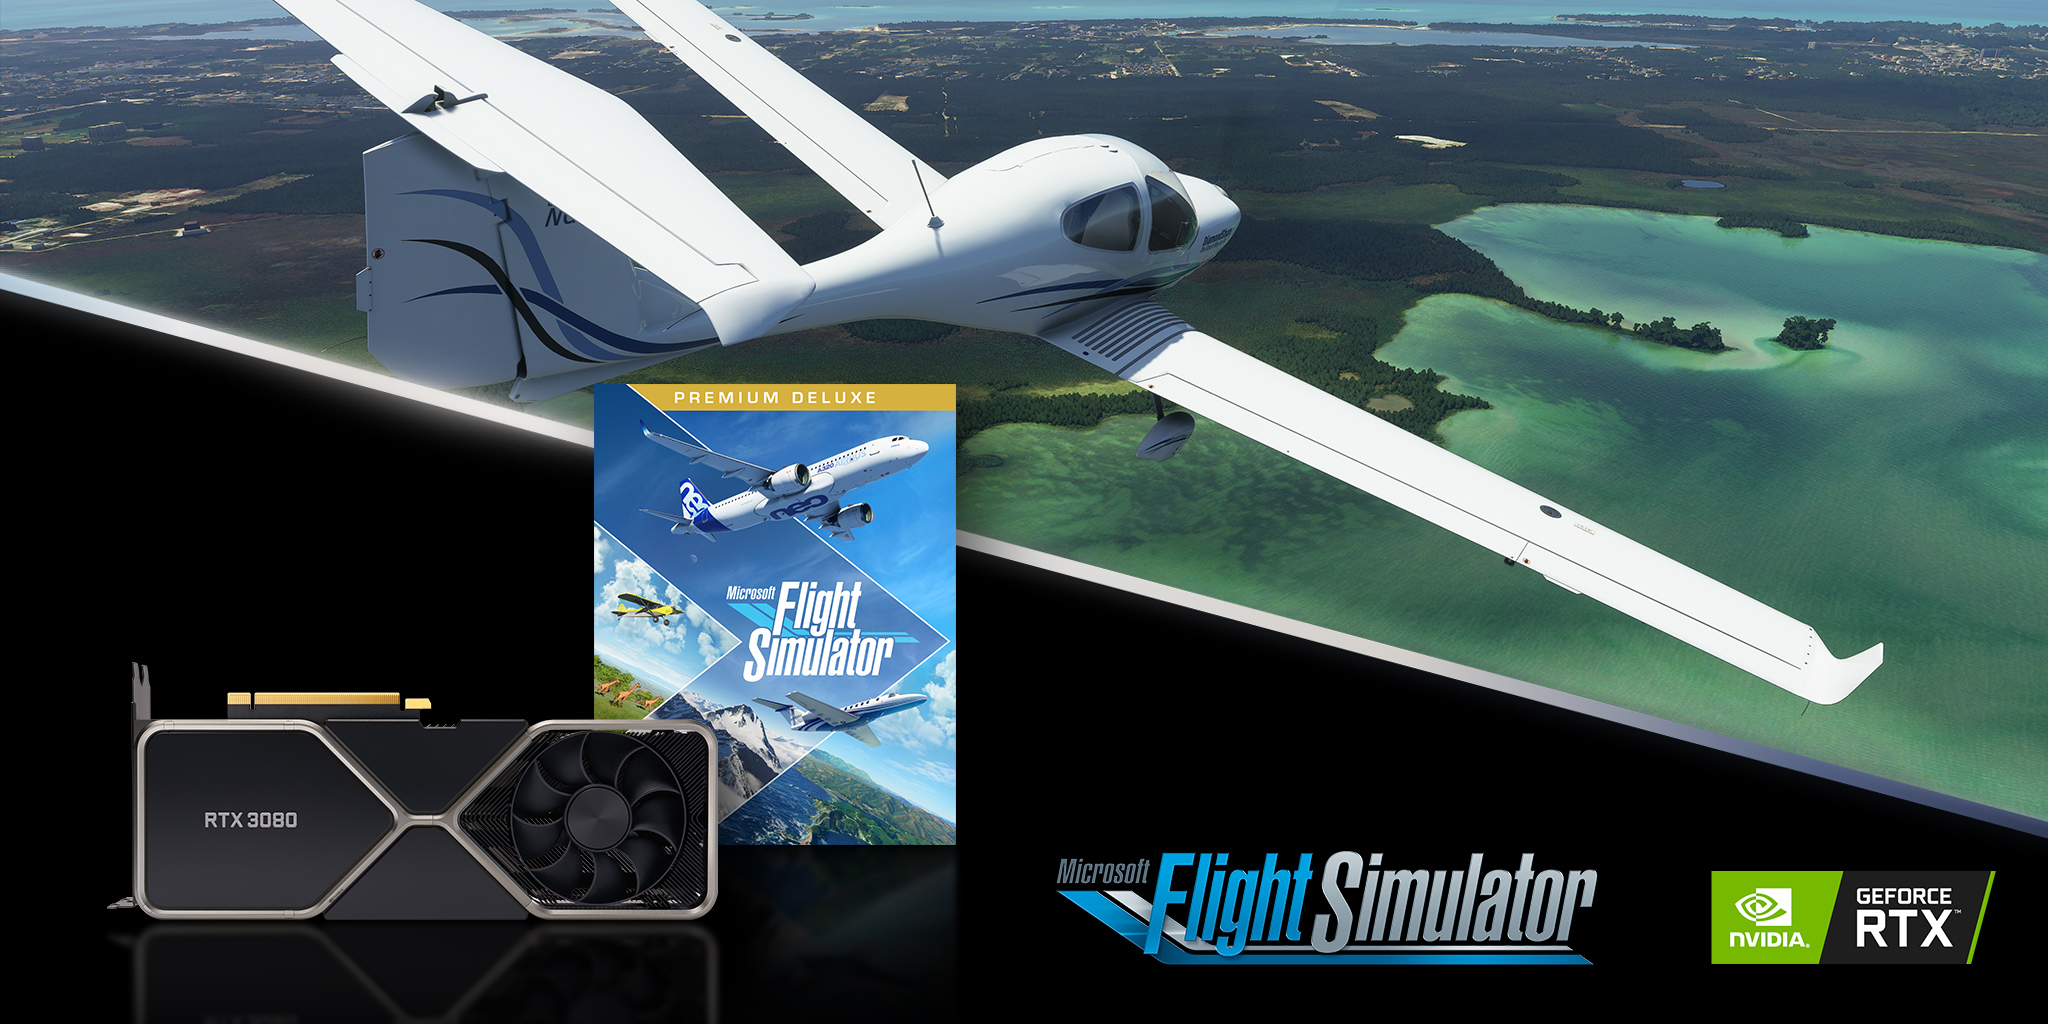 Microsoft Flight Simulator 2020 Benchmarks, Performance and System